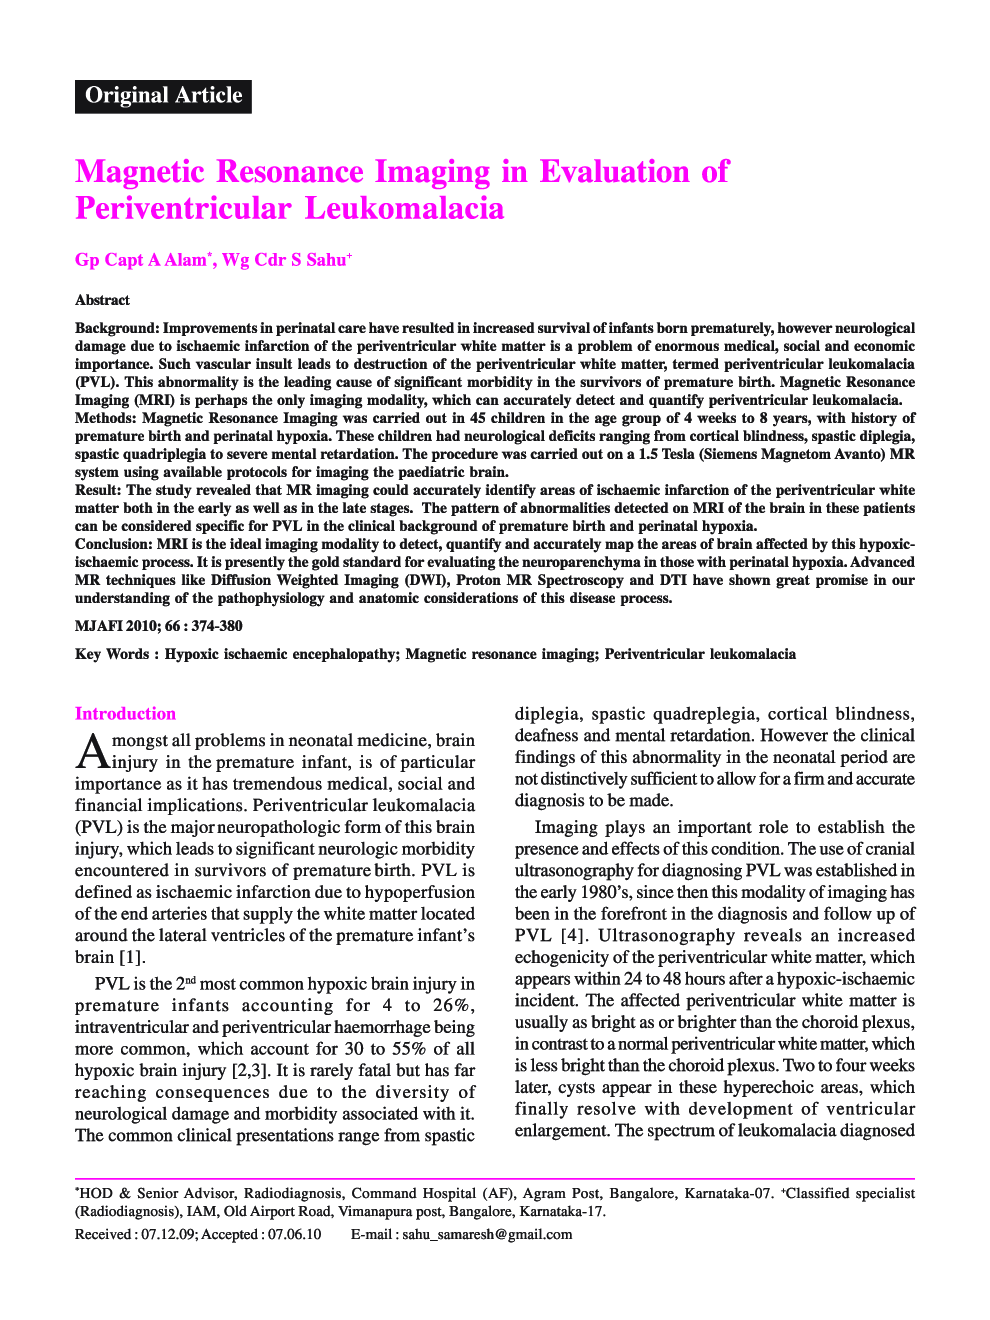 Magnetic Resonance Imaging in Evaluation of Periventricular Leukomalacia